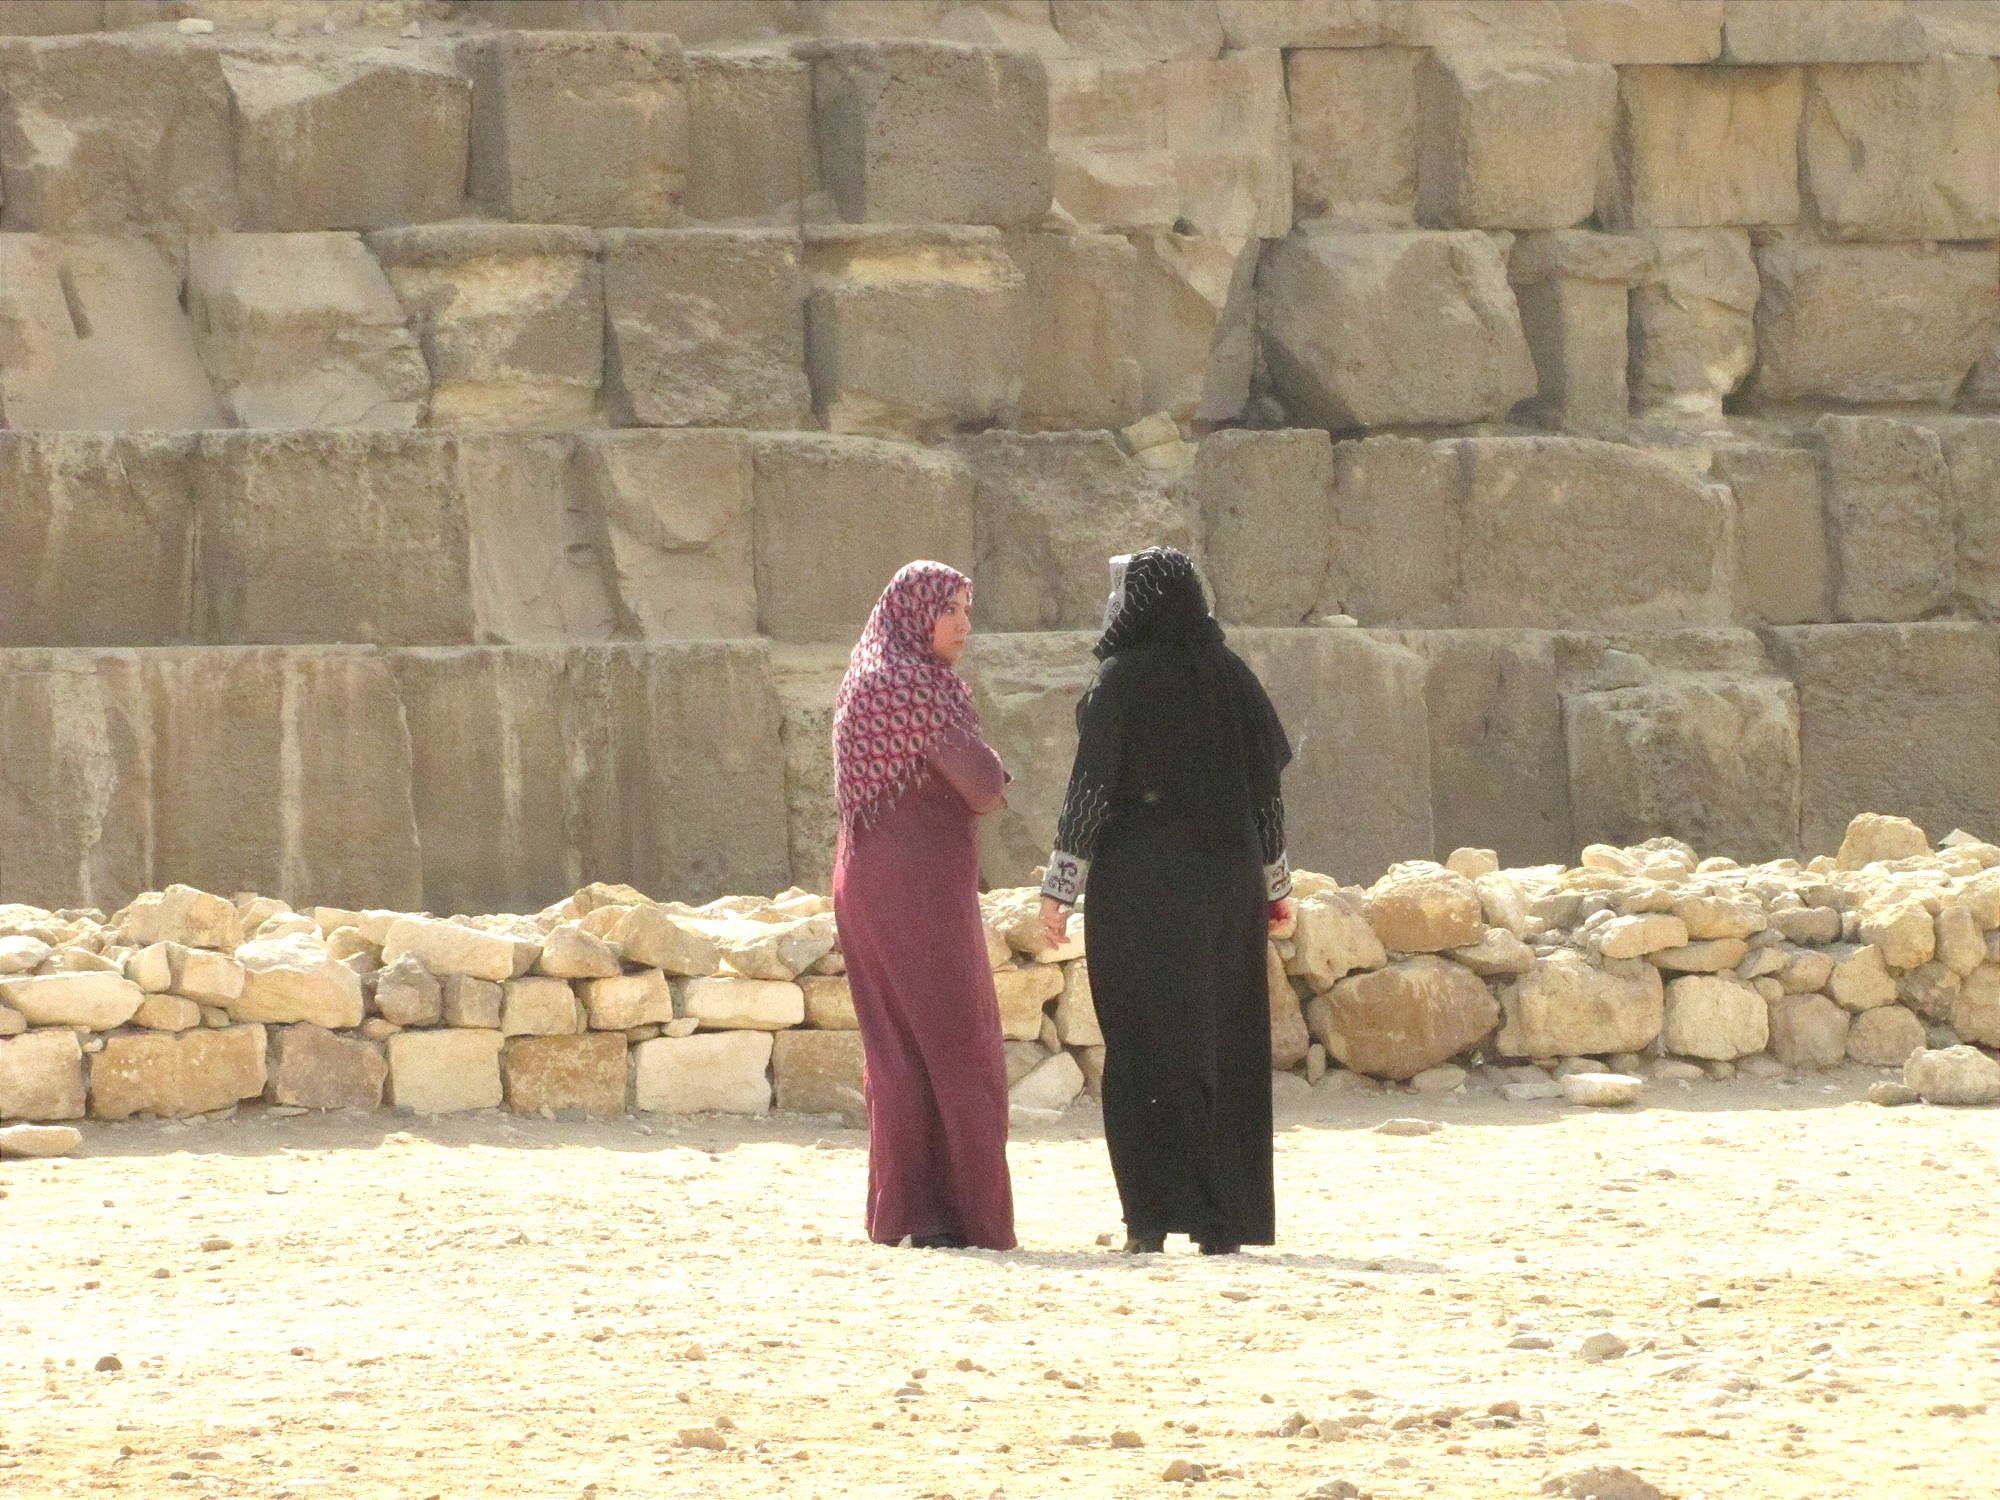 Charla frente a la pirámide de Kheops, Gizah